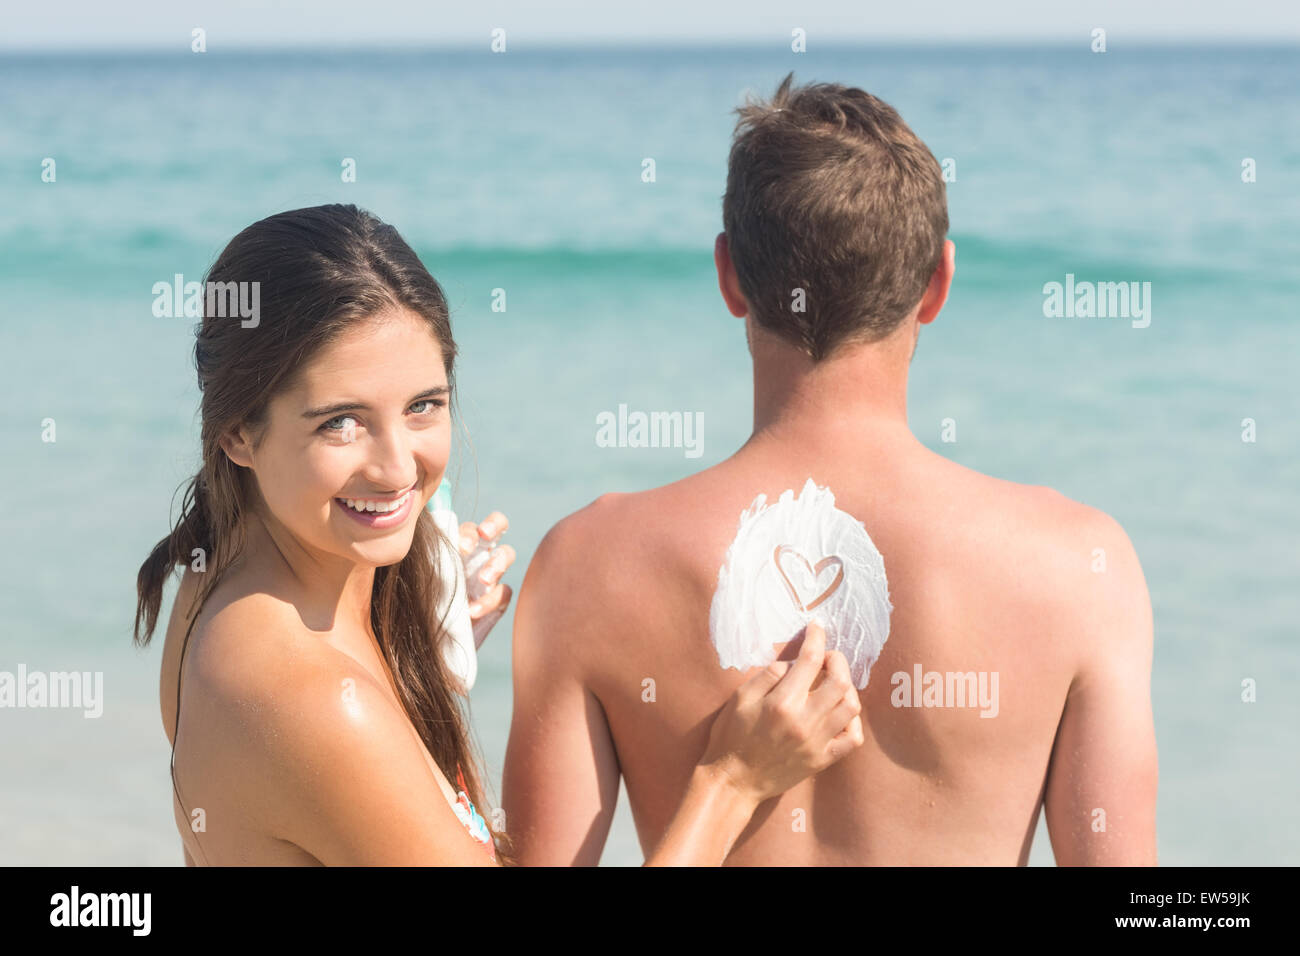 Woman putting sun tan lotion on her boyfriend Stock Photo